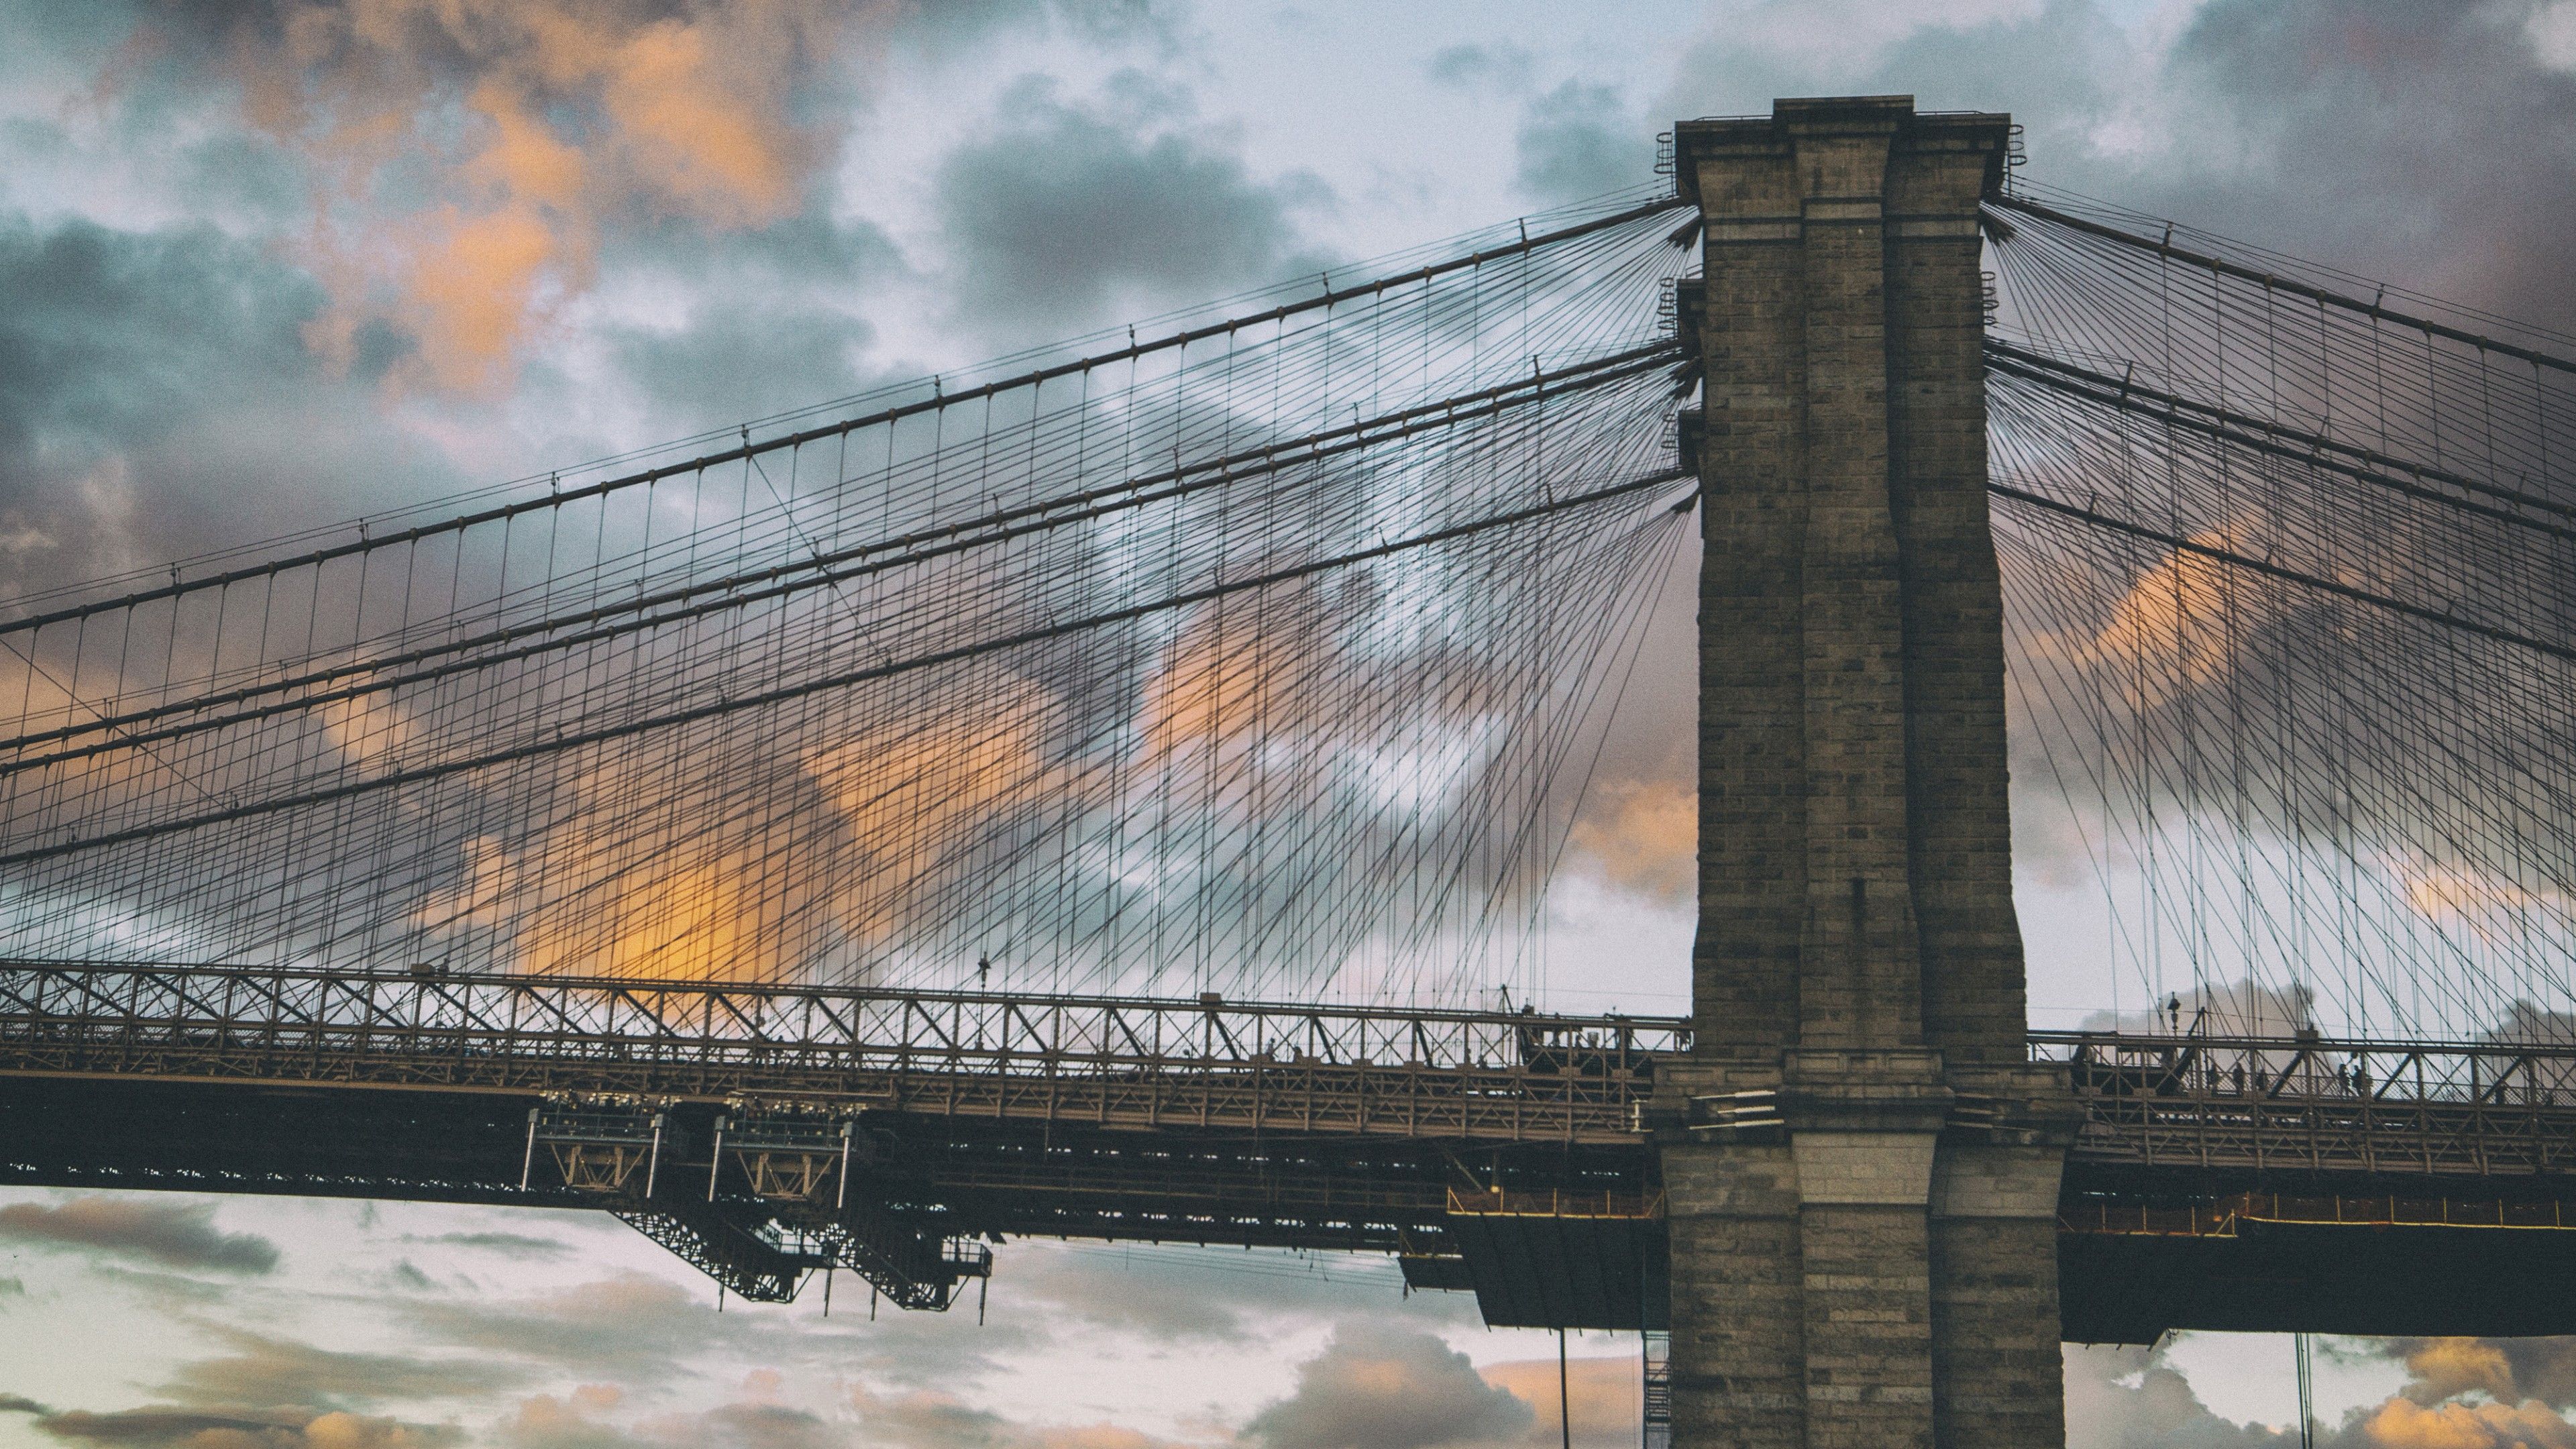 Wallpaper Brooklyn Bridge, New York, Dumbo in Brooklyn, clouds, sunset, Architecture